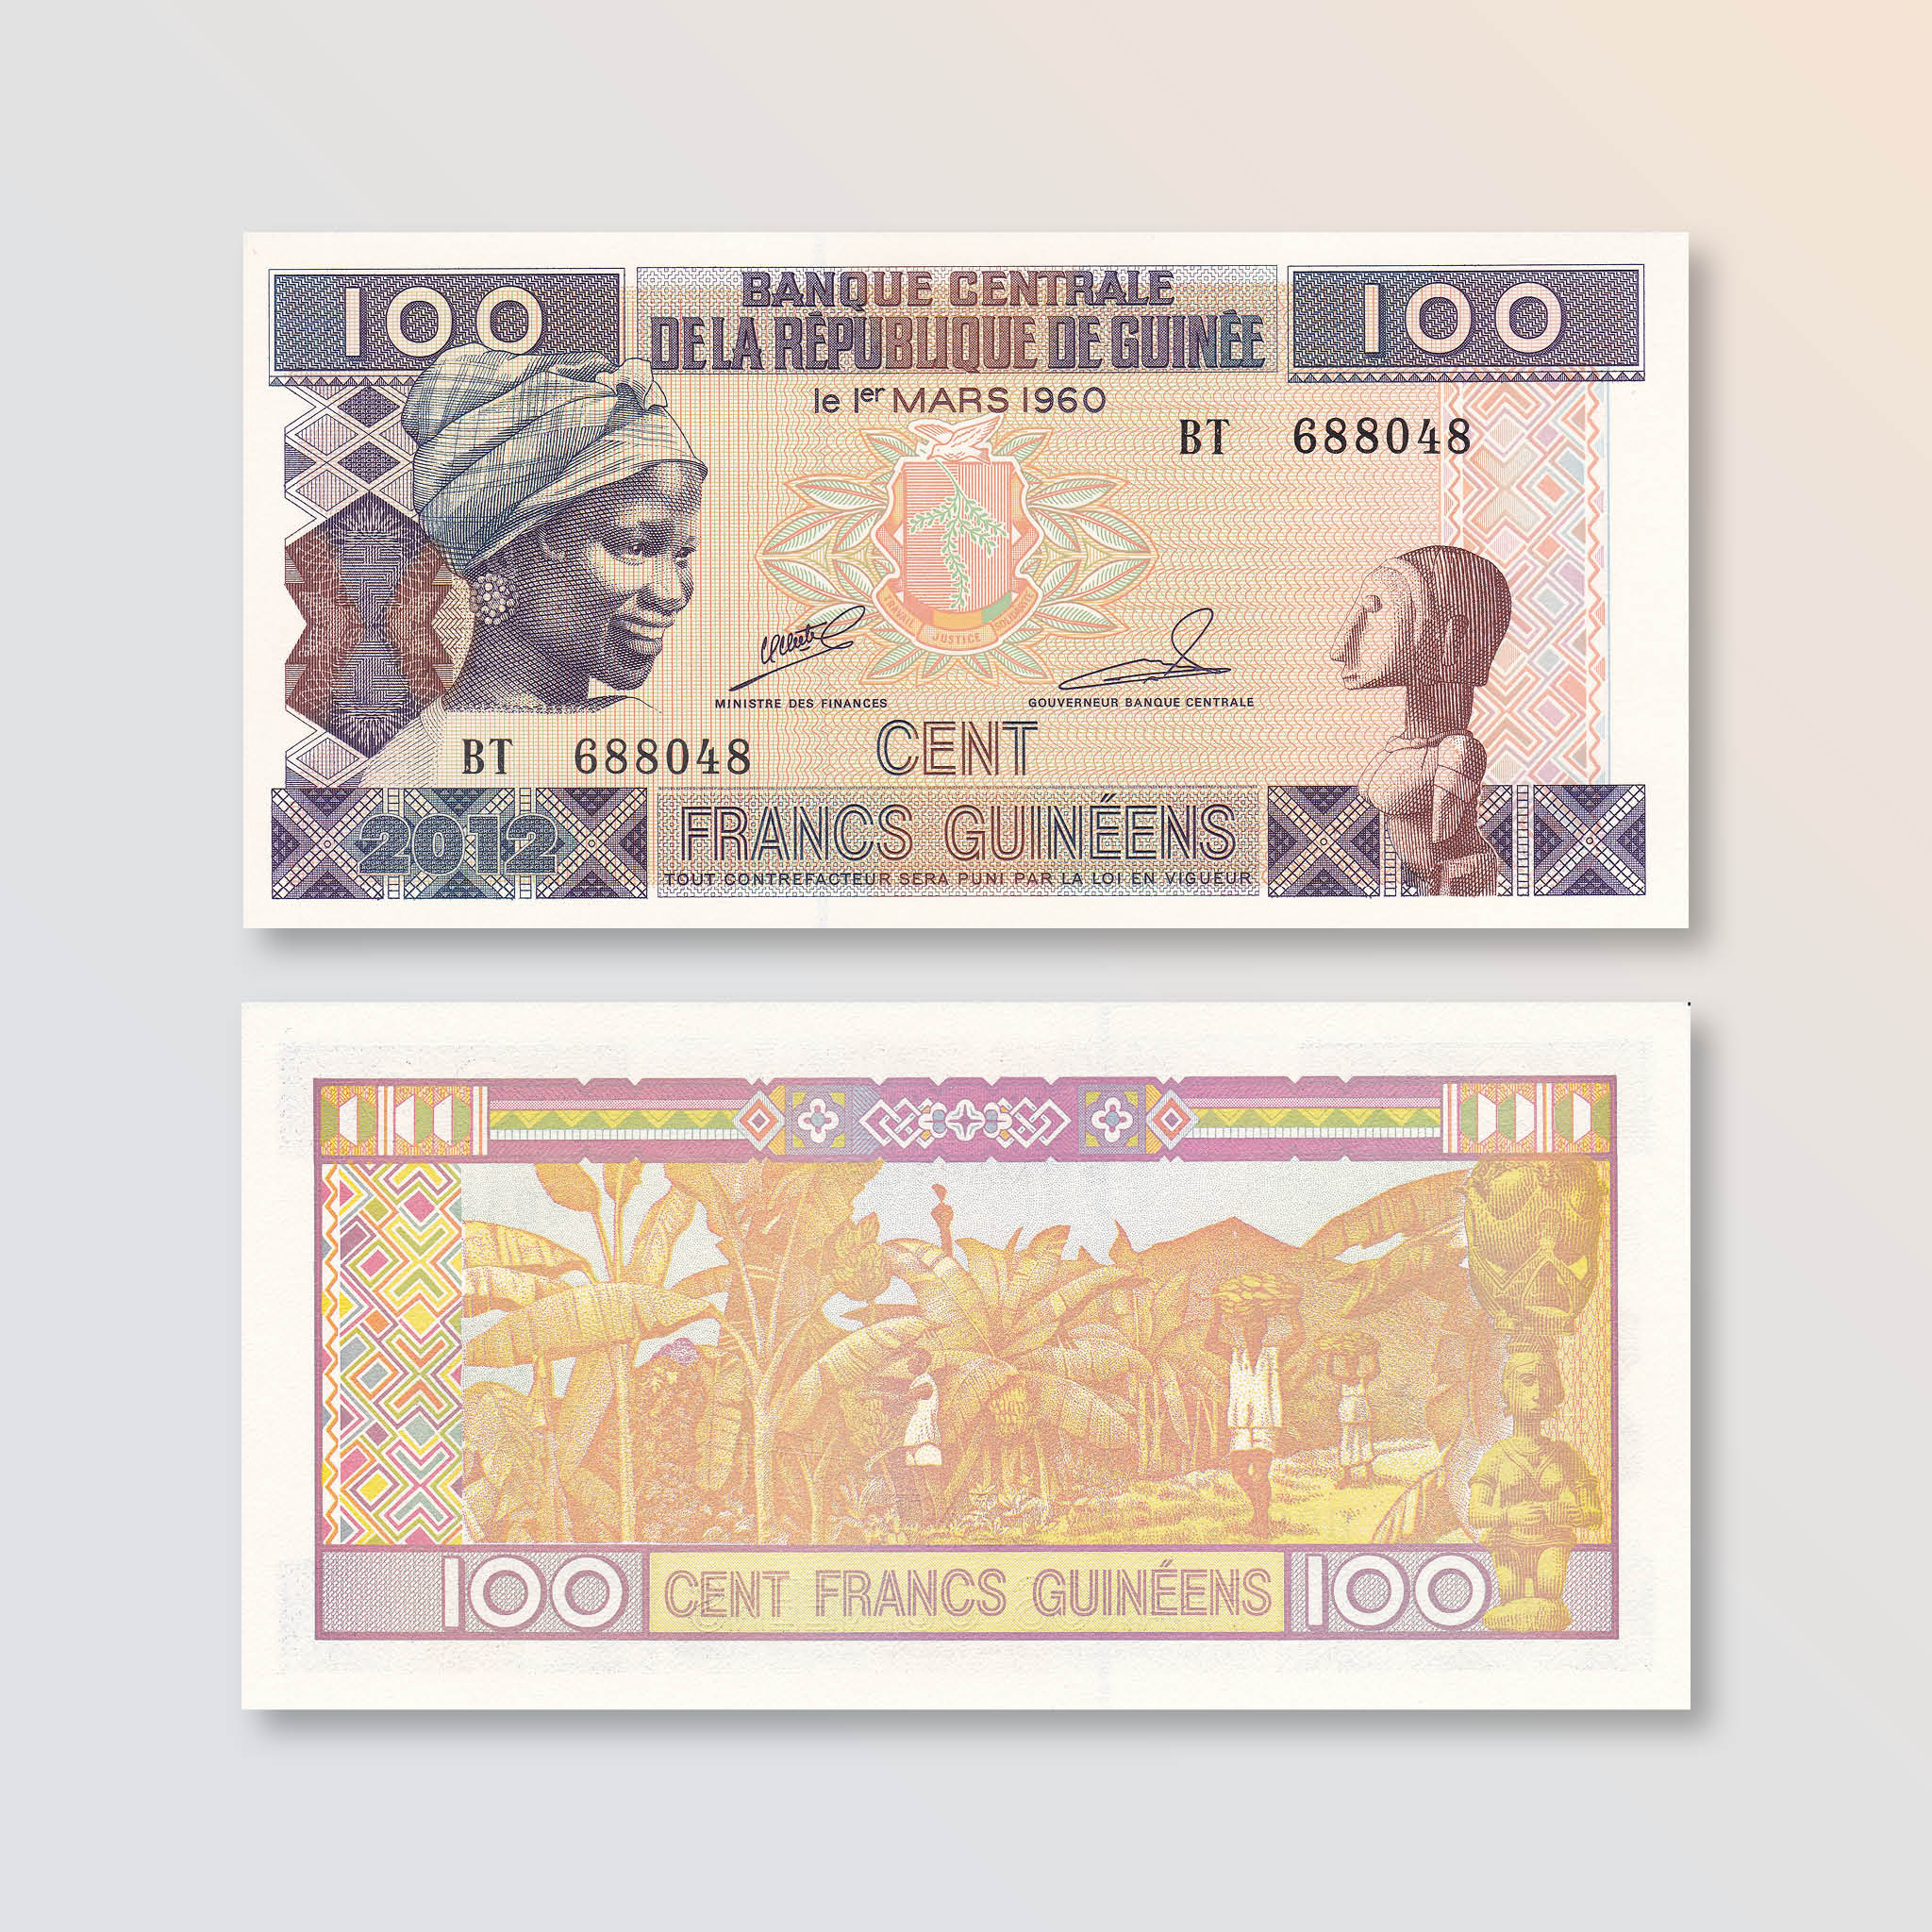 Guinea 100 Francs, 2012, B324c, P35b, UNC - Robert's World Money - World Banknotes